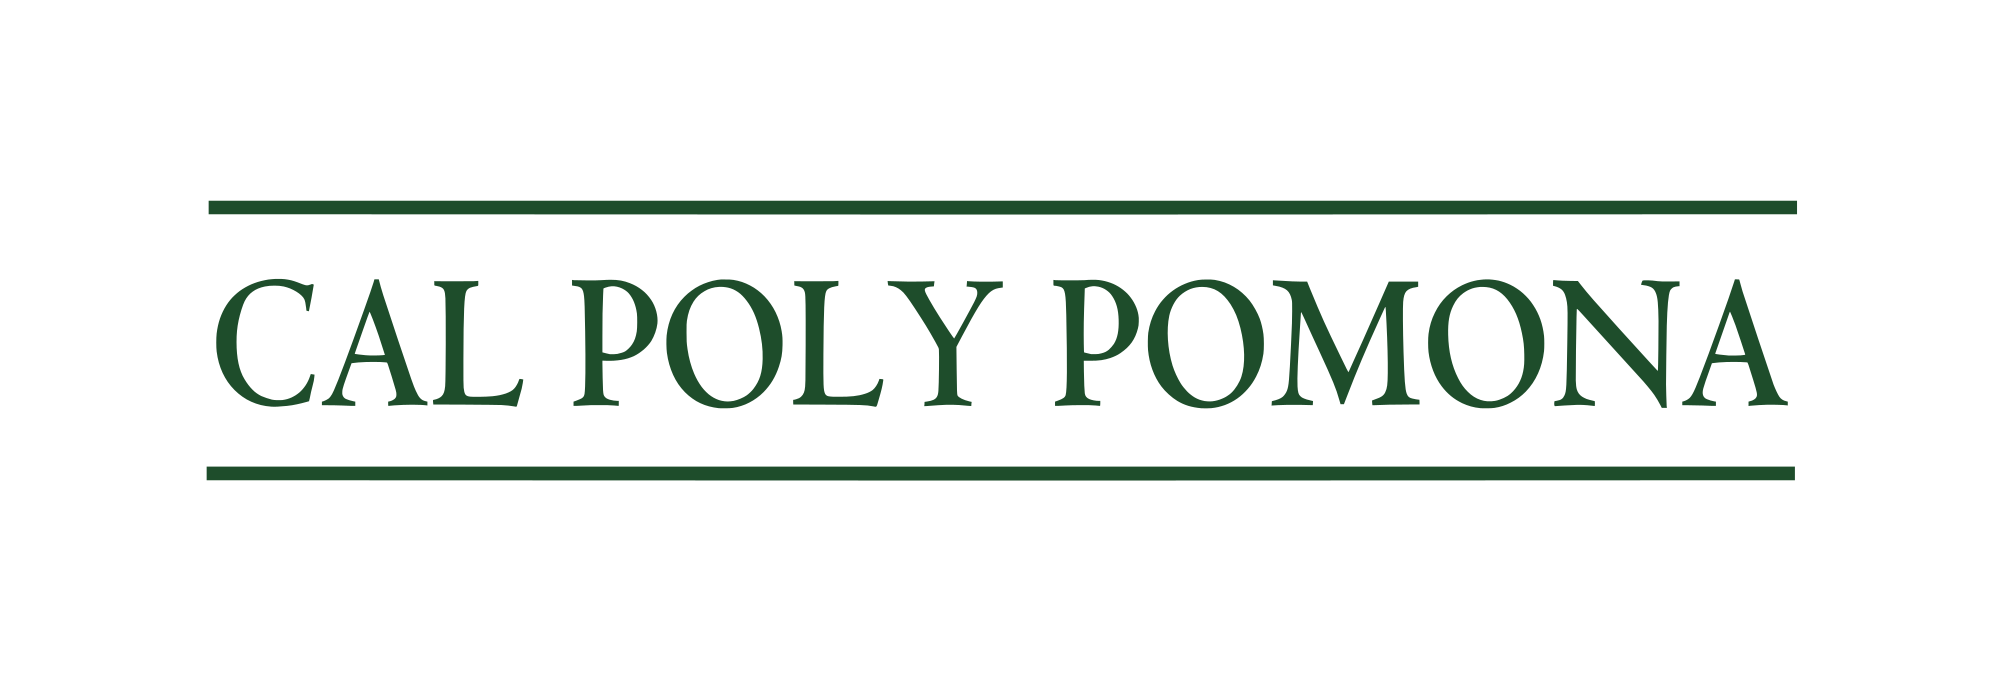 Cal poly pomona dating